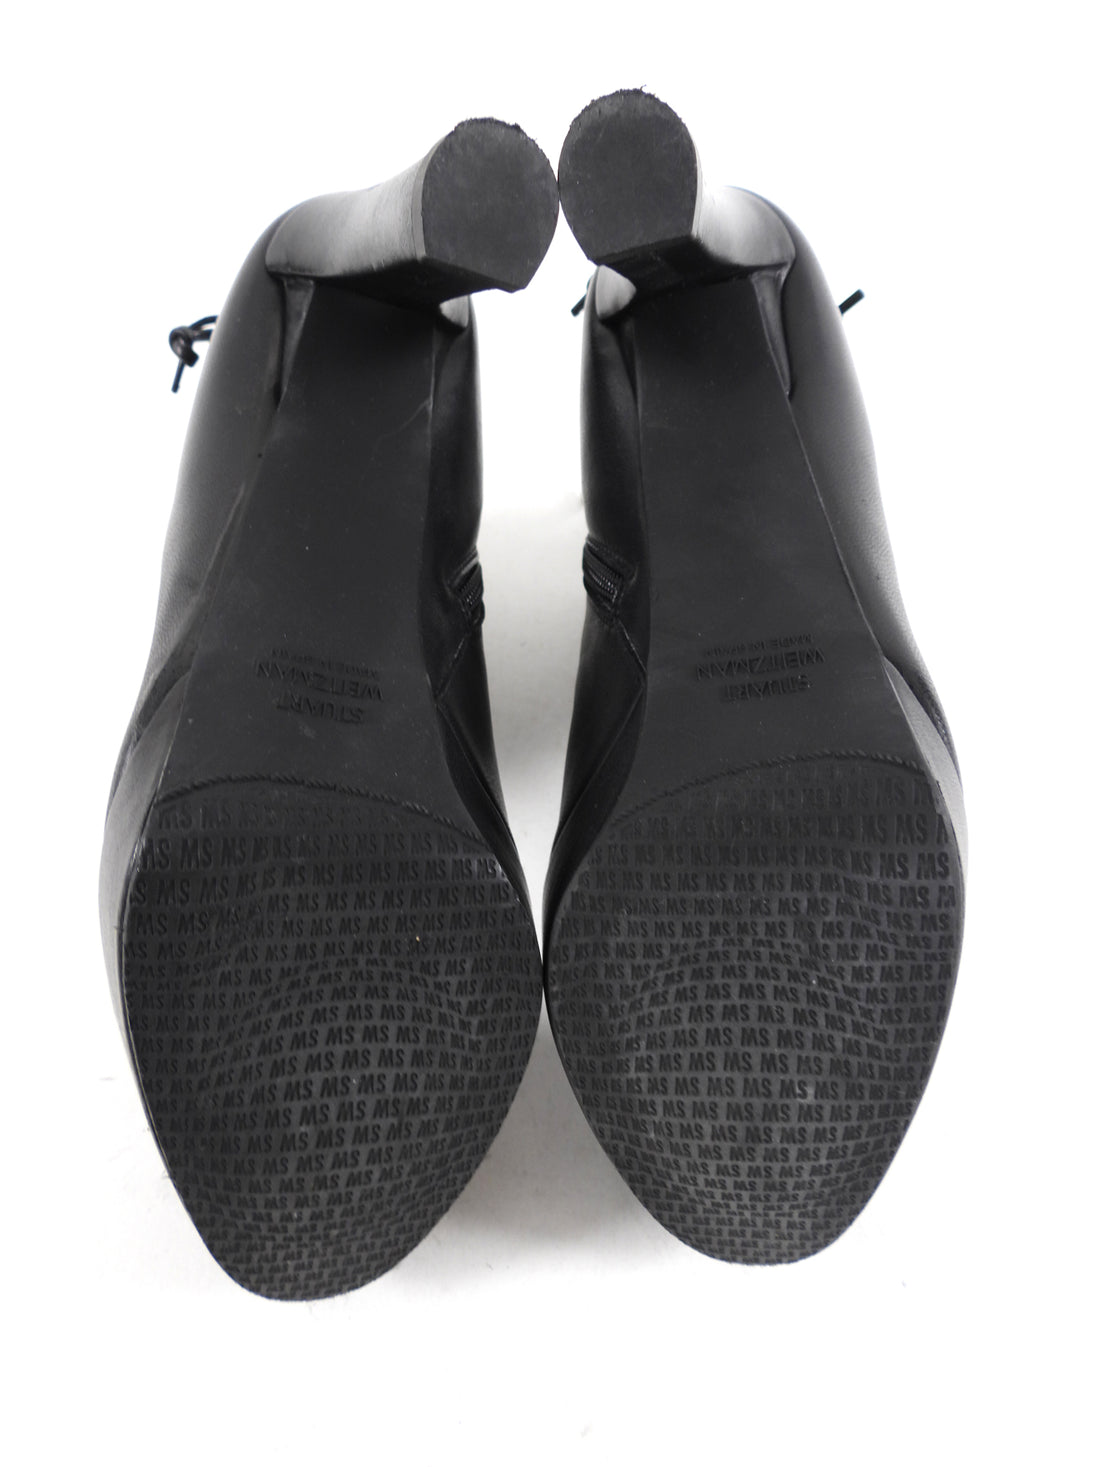 Stuart Weitzman Black Leather 110mm Ankle boot - Euro 37